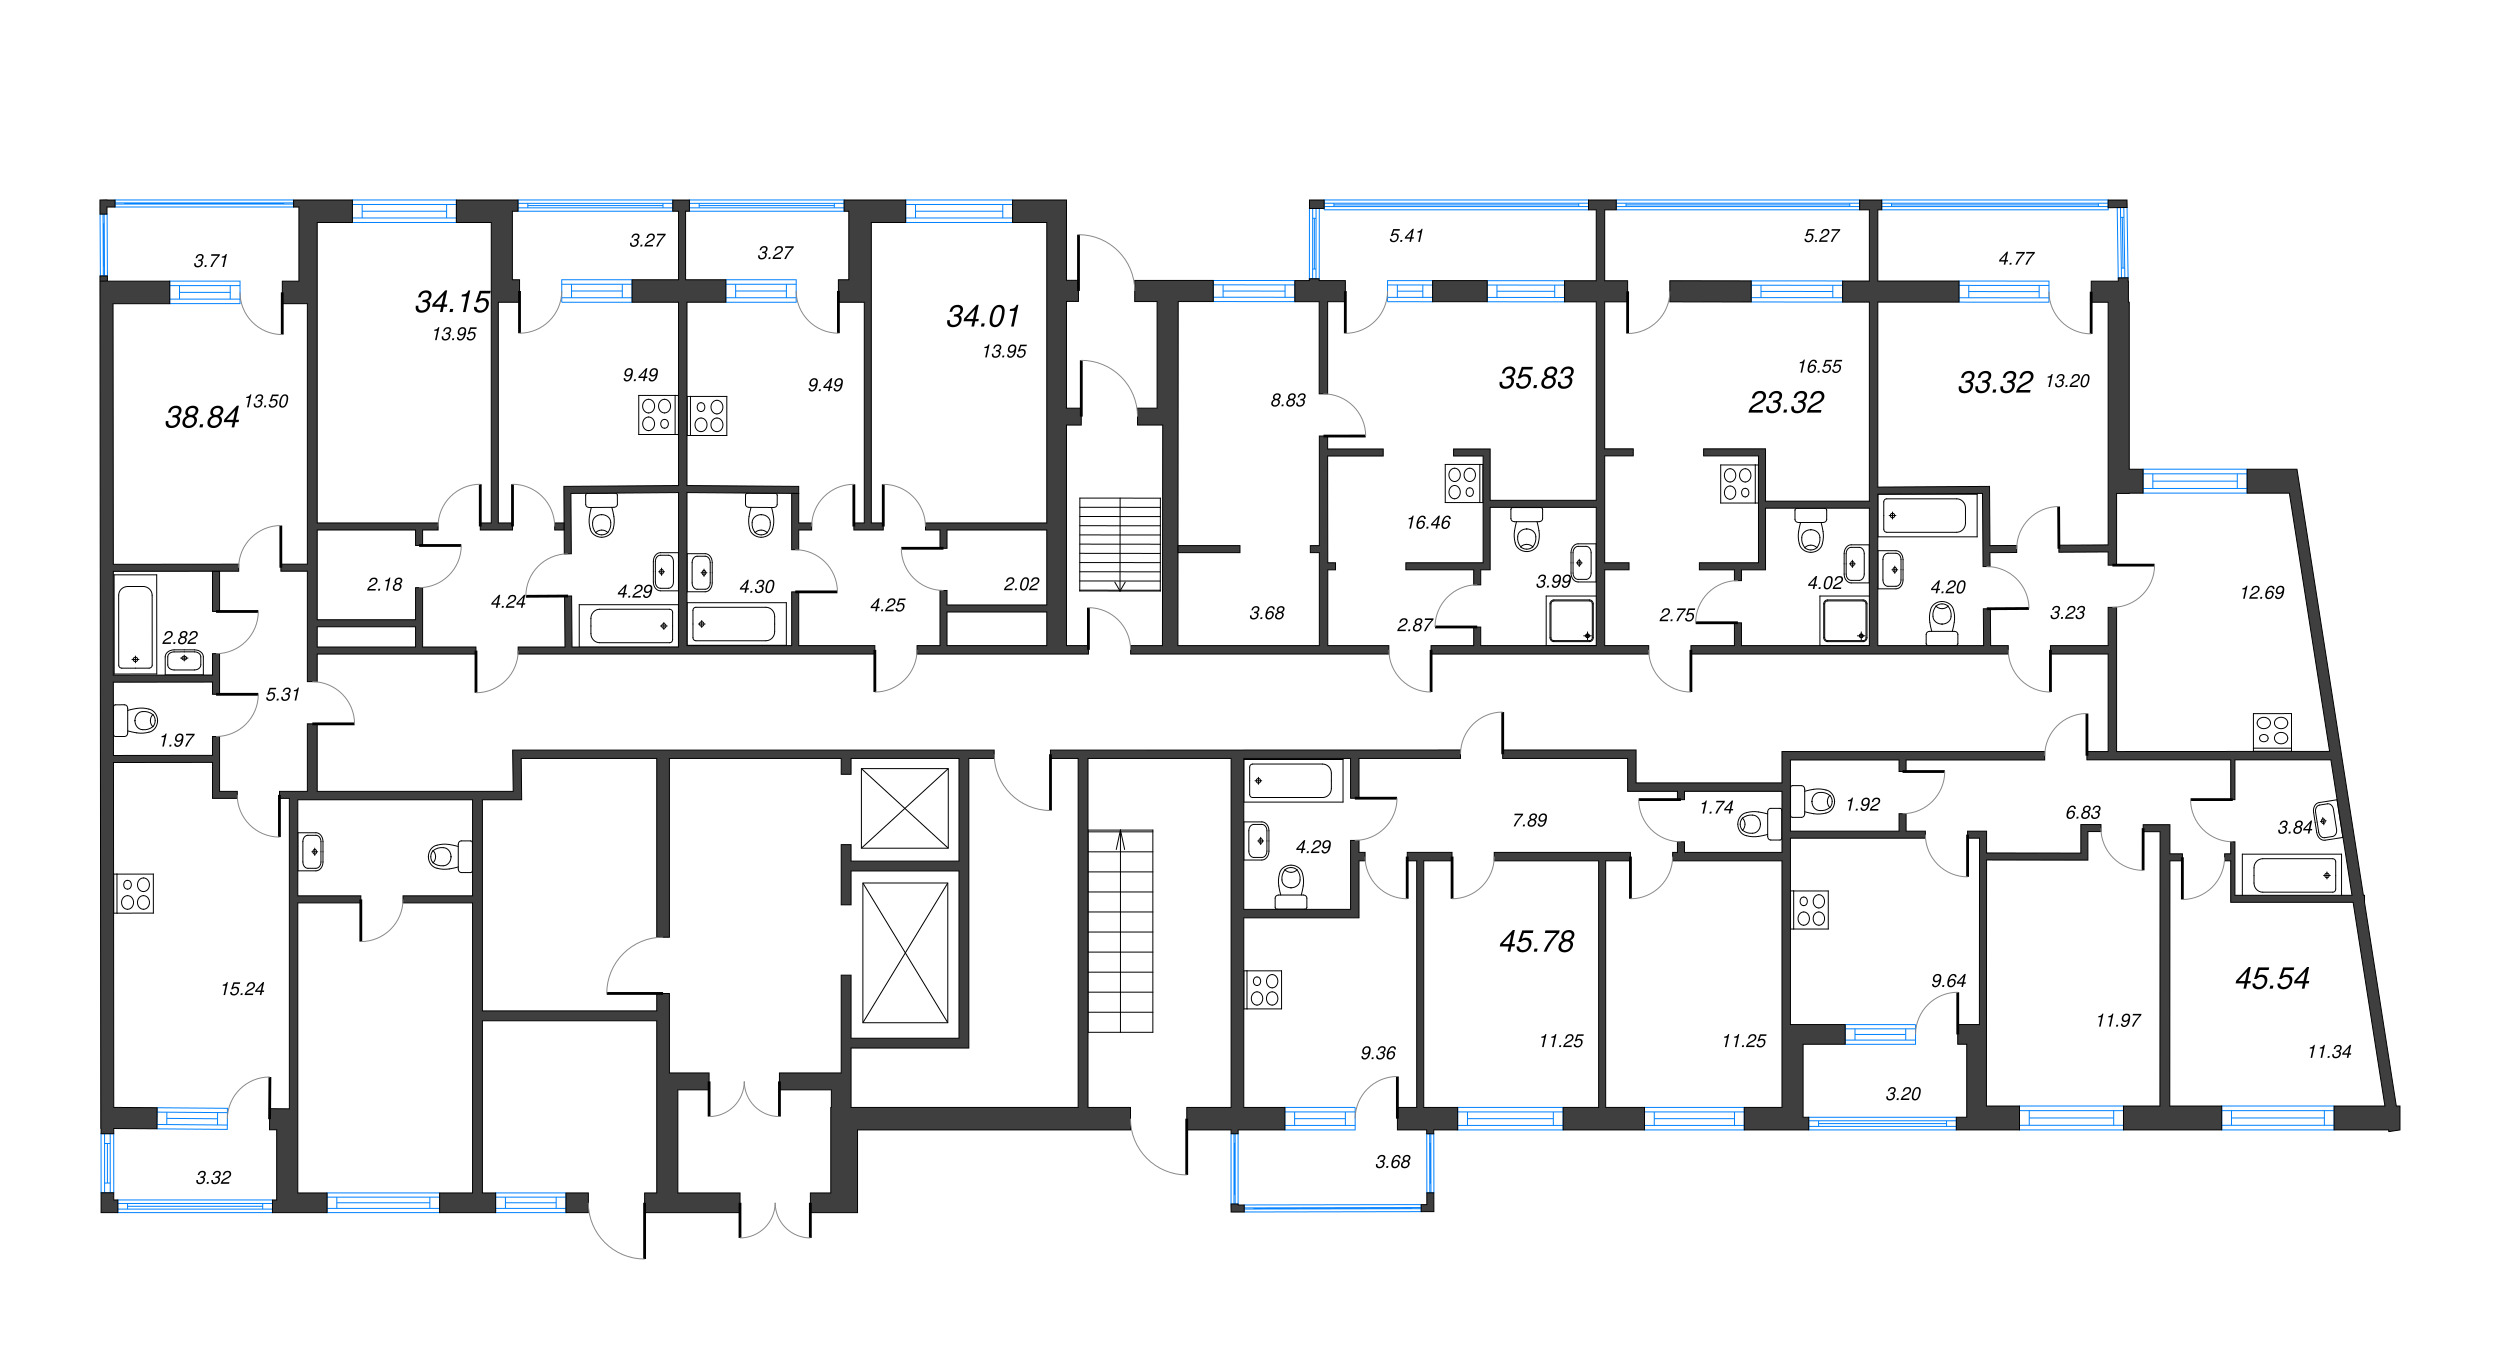 2-комнатная (Евро) квартира, 38.84 м² - планировка этажа